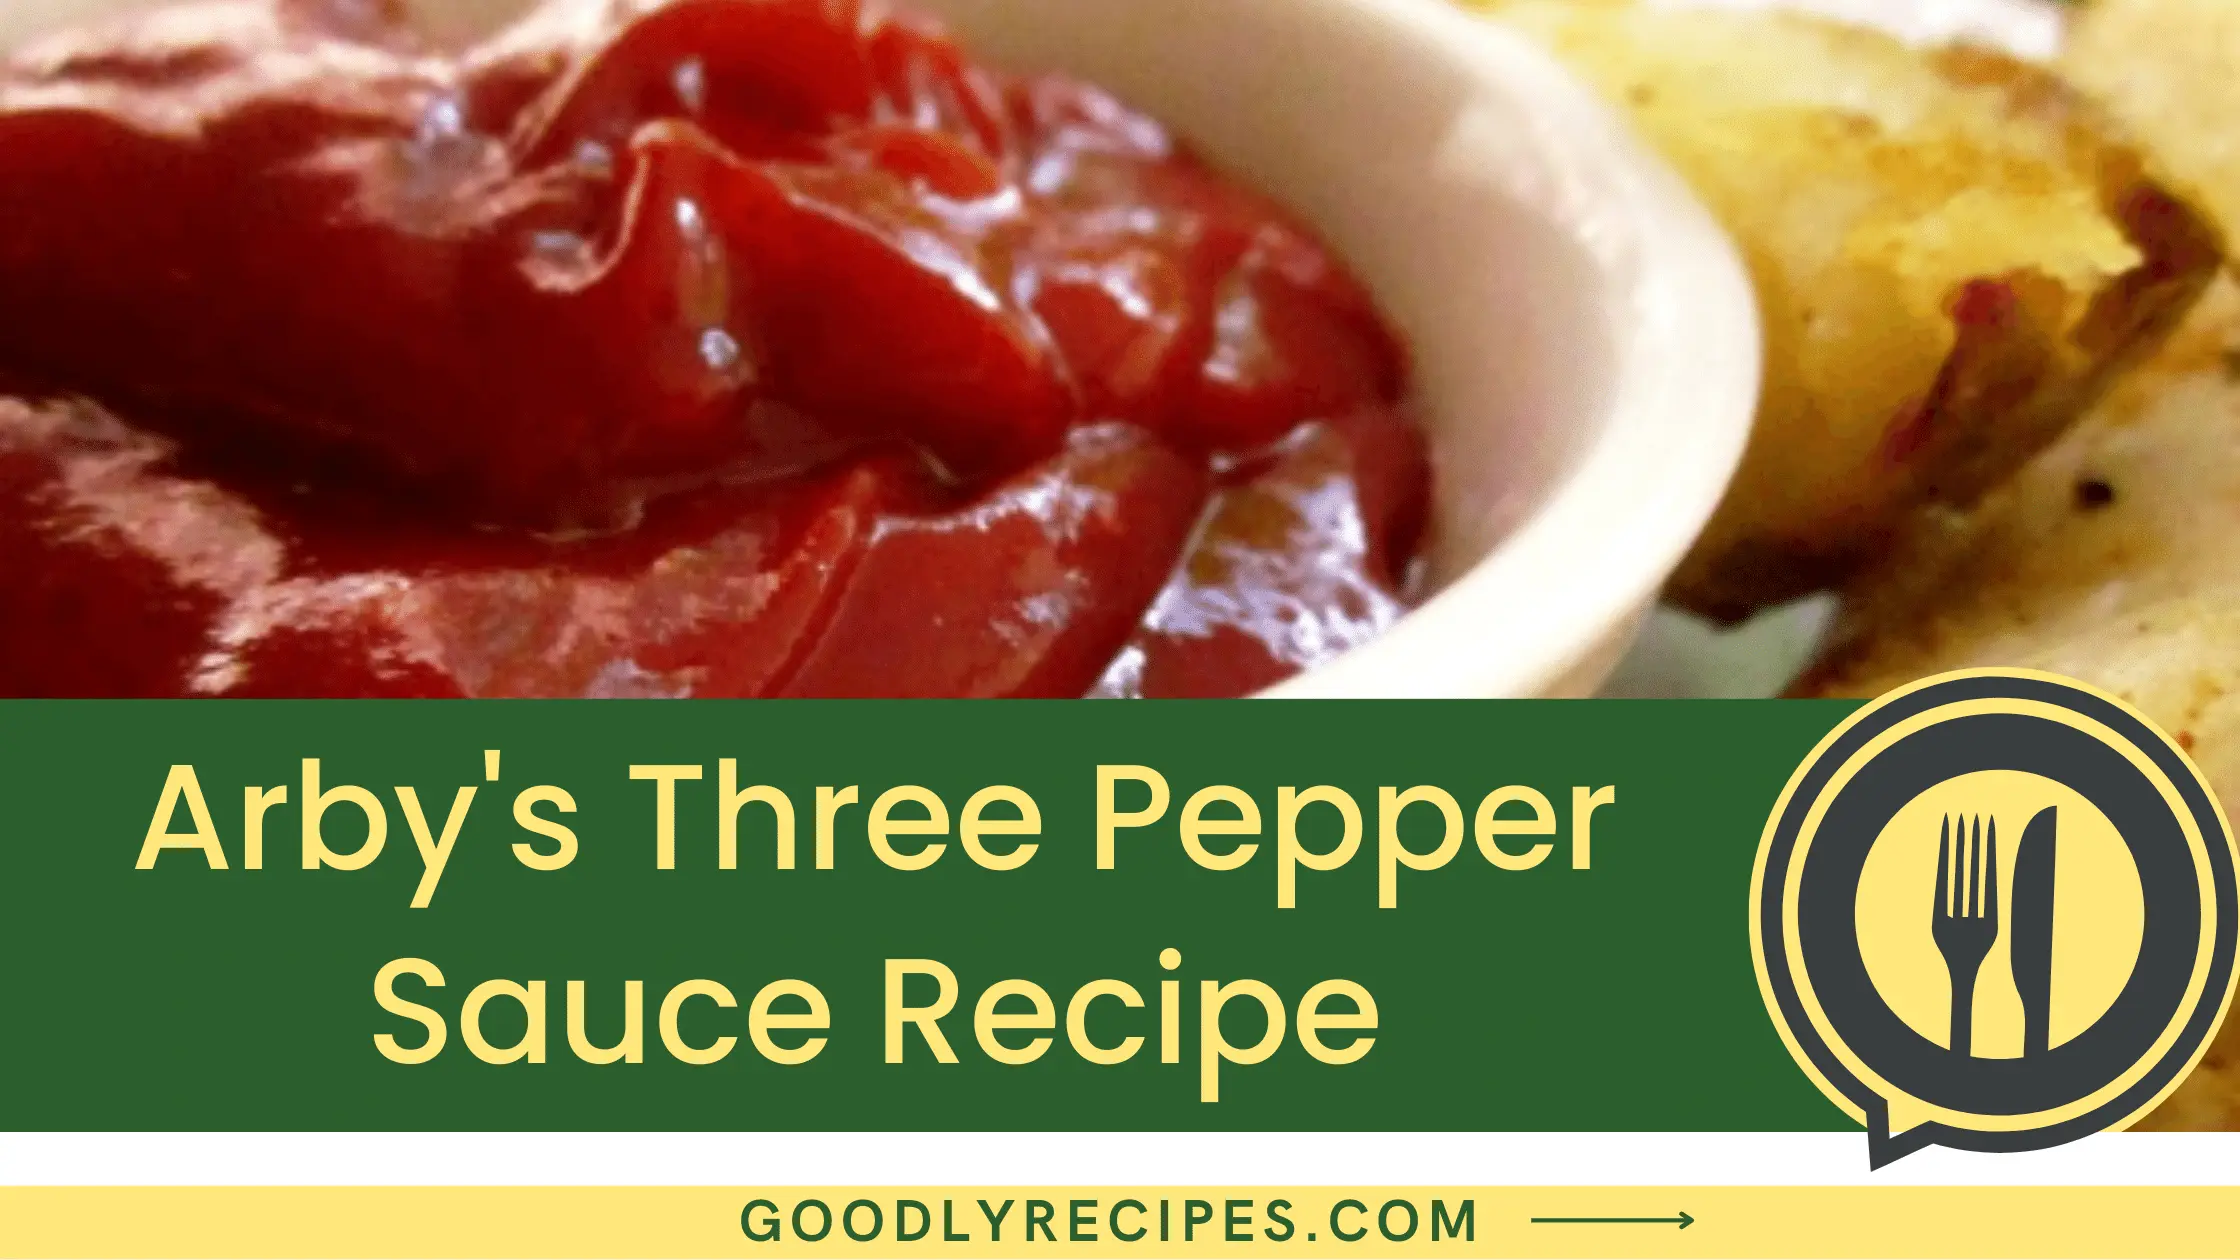 Arby's Three Pepper Sauce Recipe